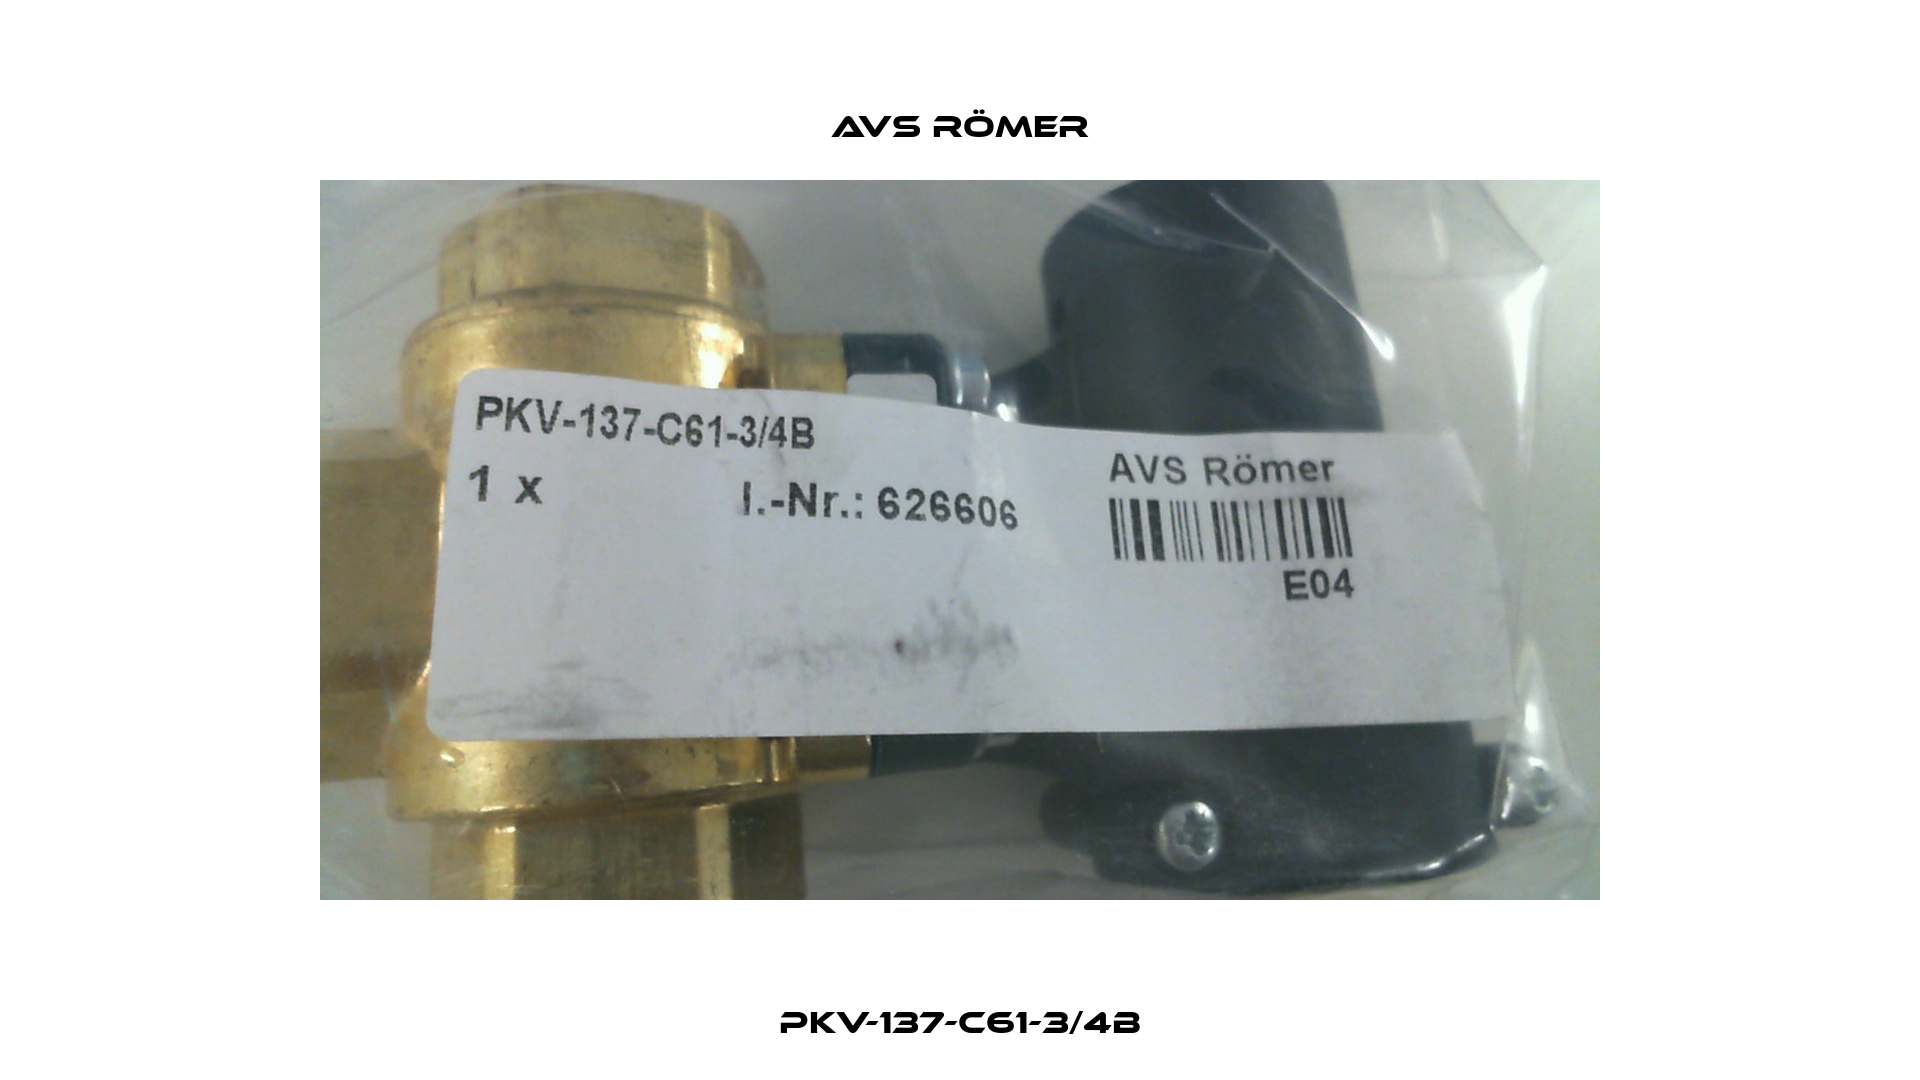 PKV-137-C61-3/4B Avs Römer